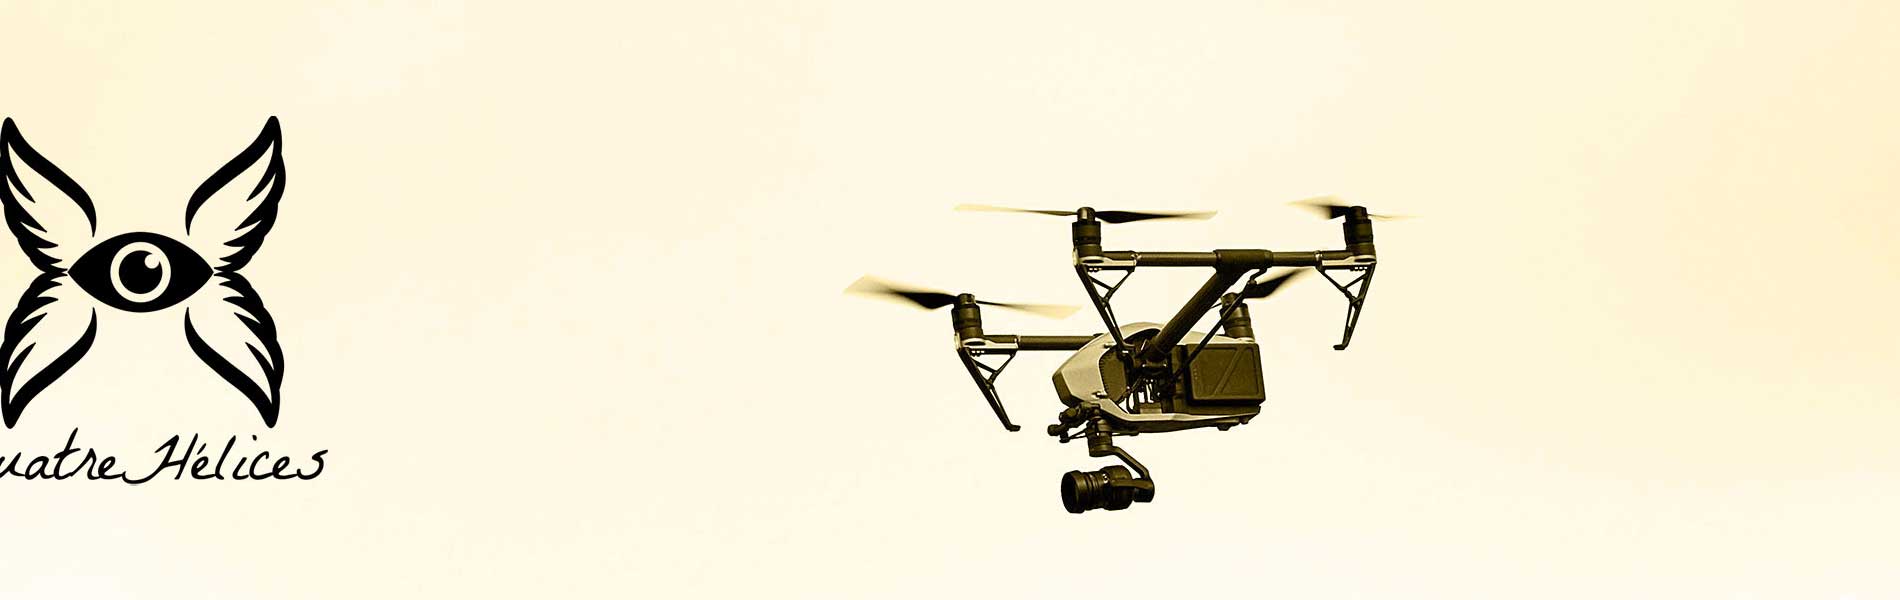 Pilote de drone